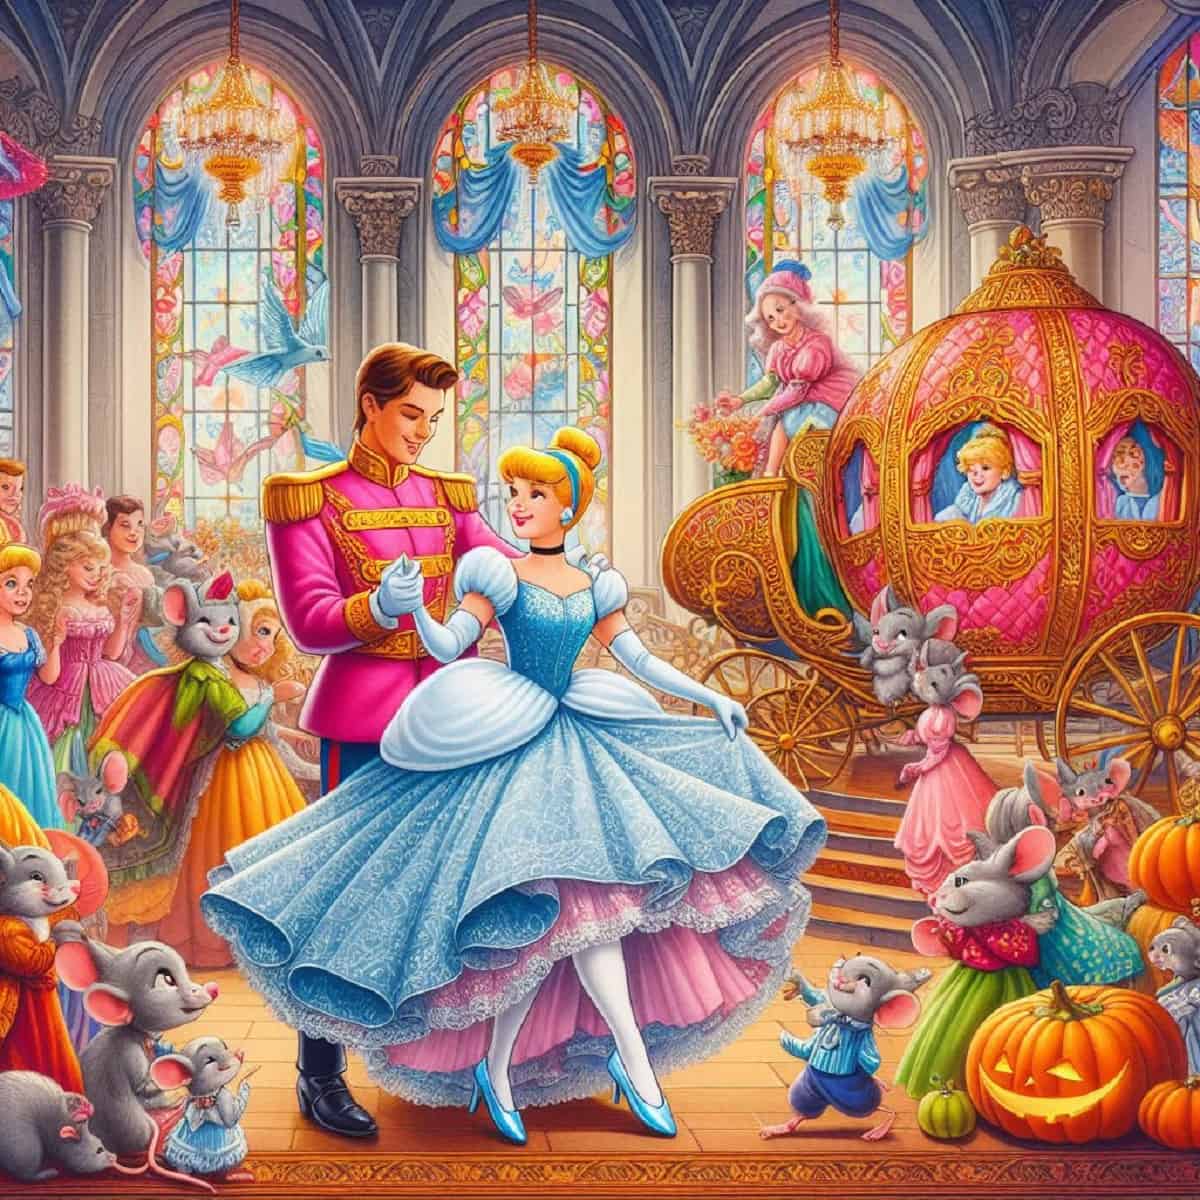 Cinderella and the Enchanted Ball